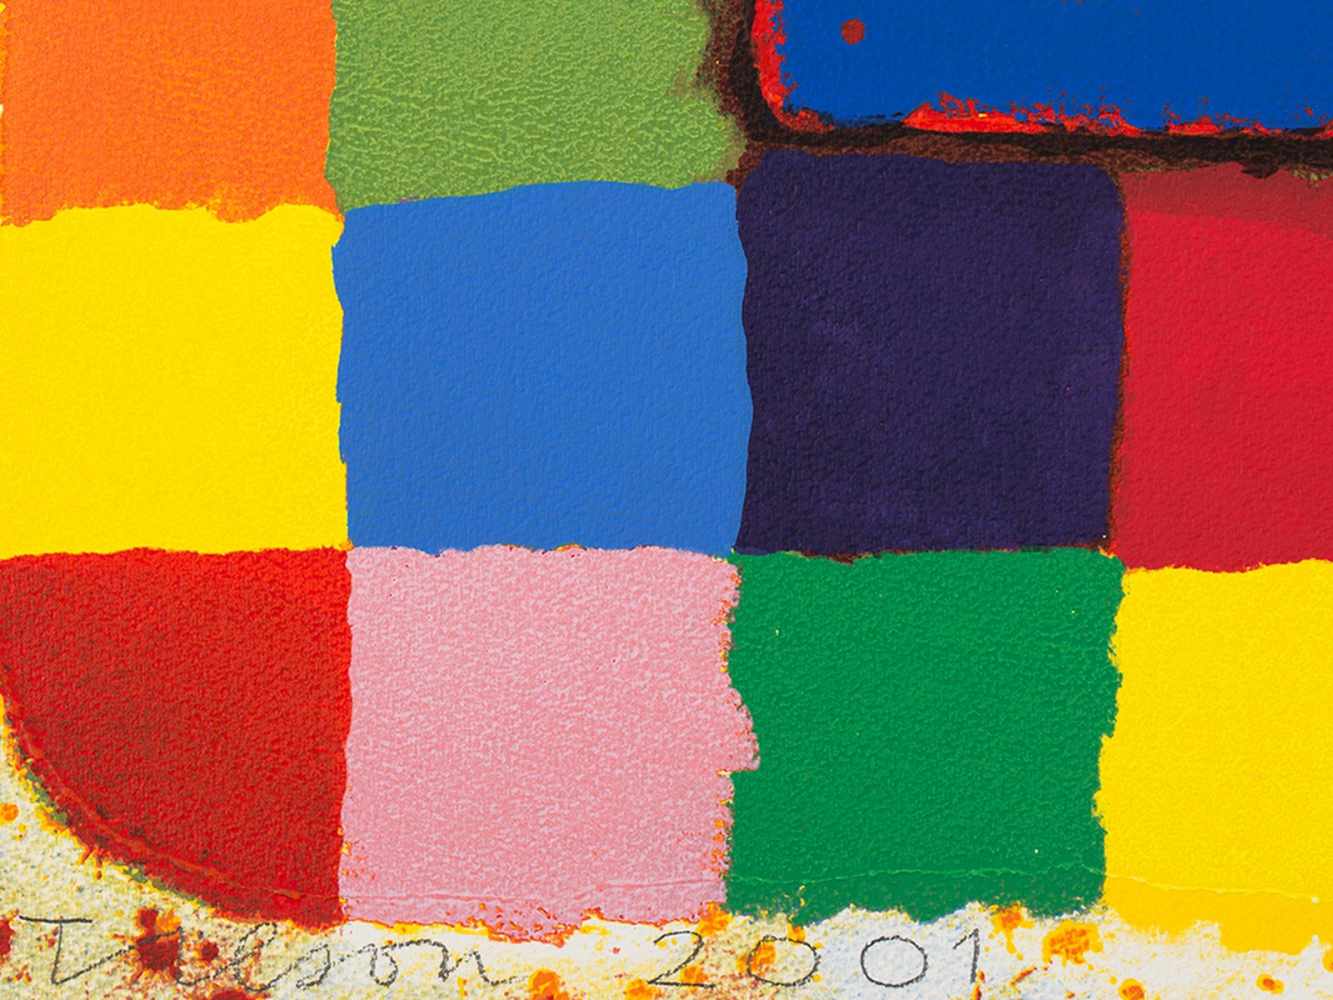 Joe Tilson, Conjunctions, 3 Serigraphs in Colors, 2001 - Image 3 of 7